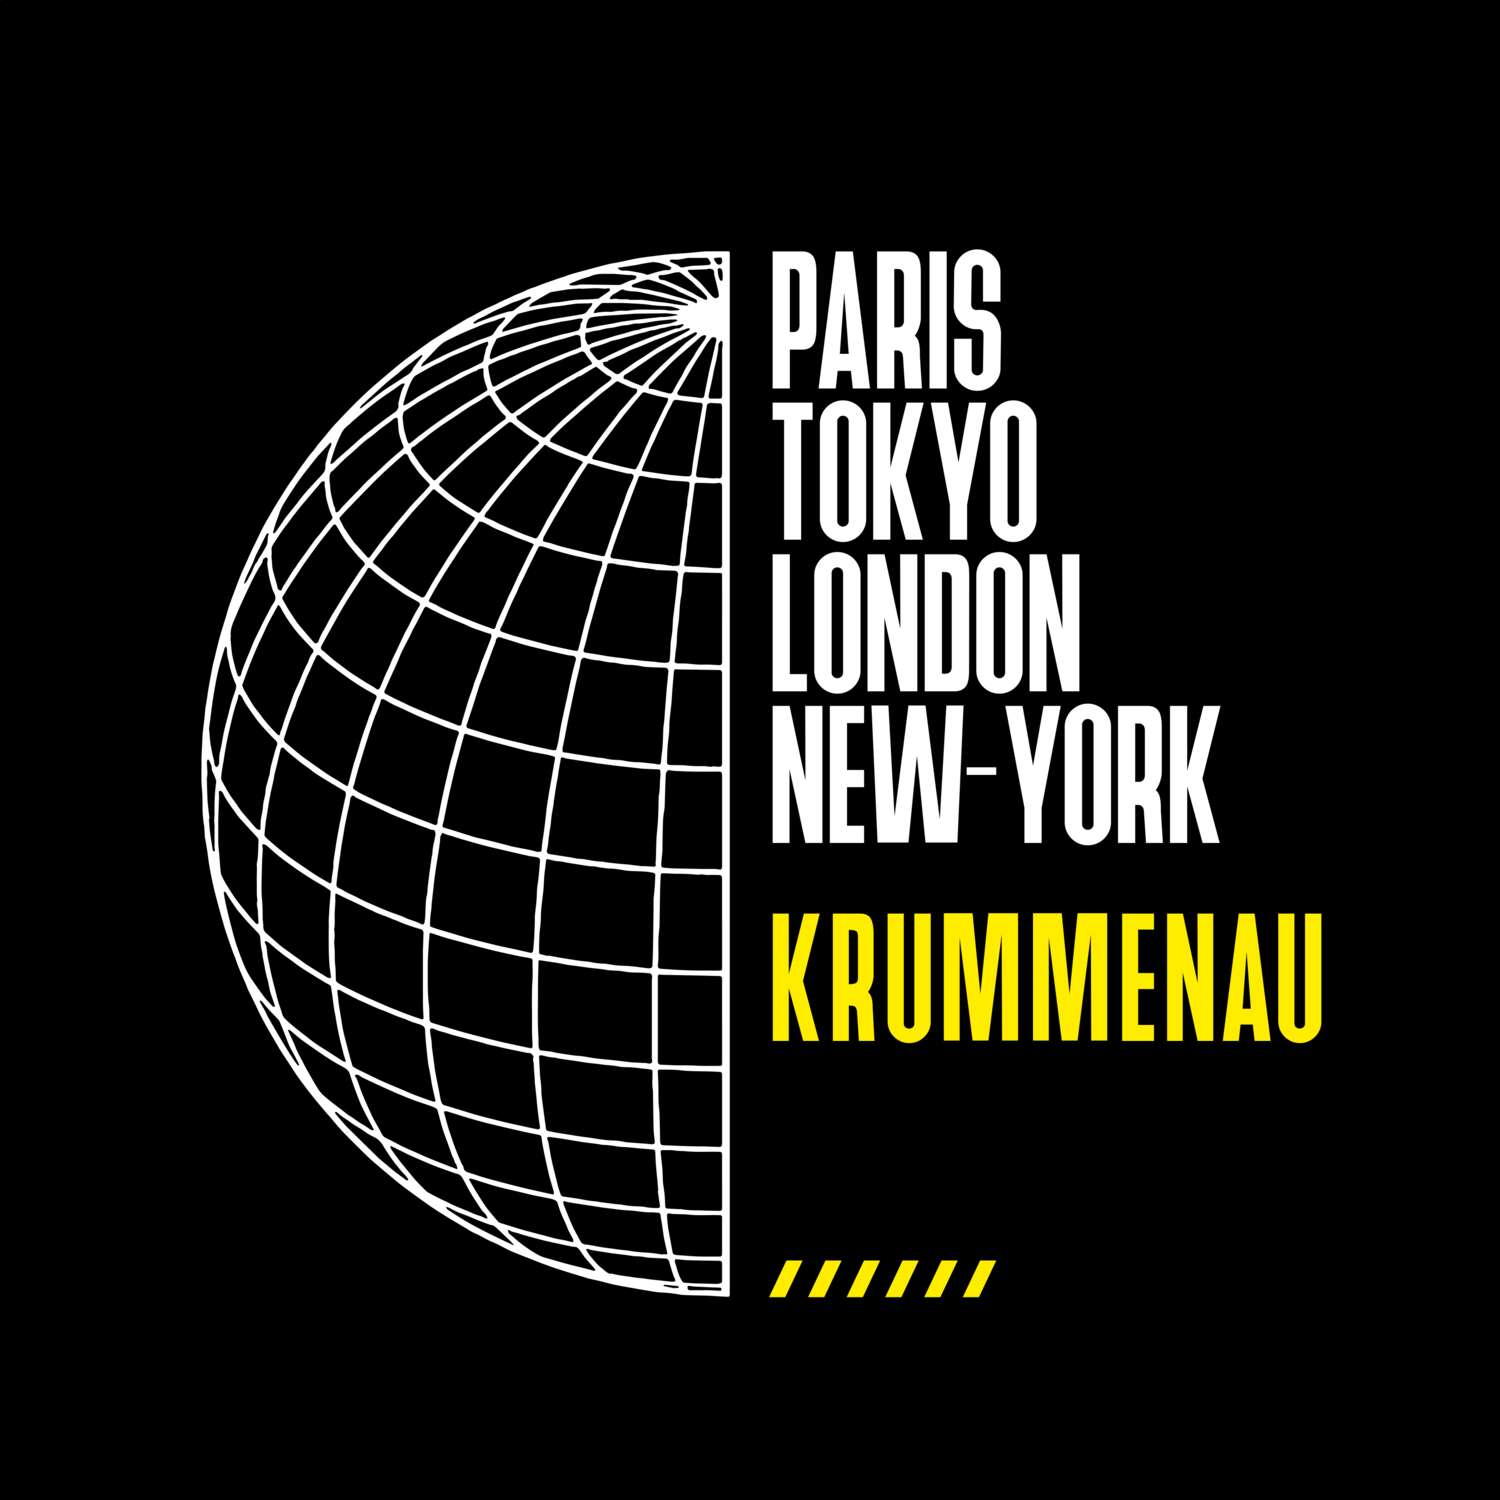 Krummenau T-Shirt »Paris Tokyo London«